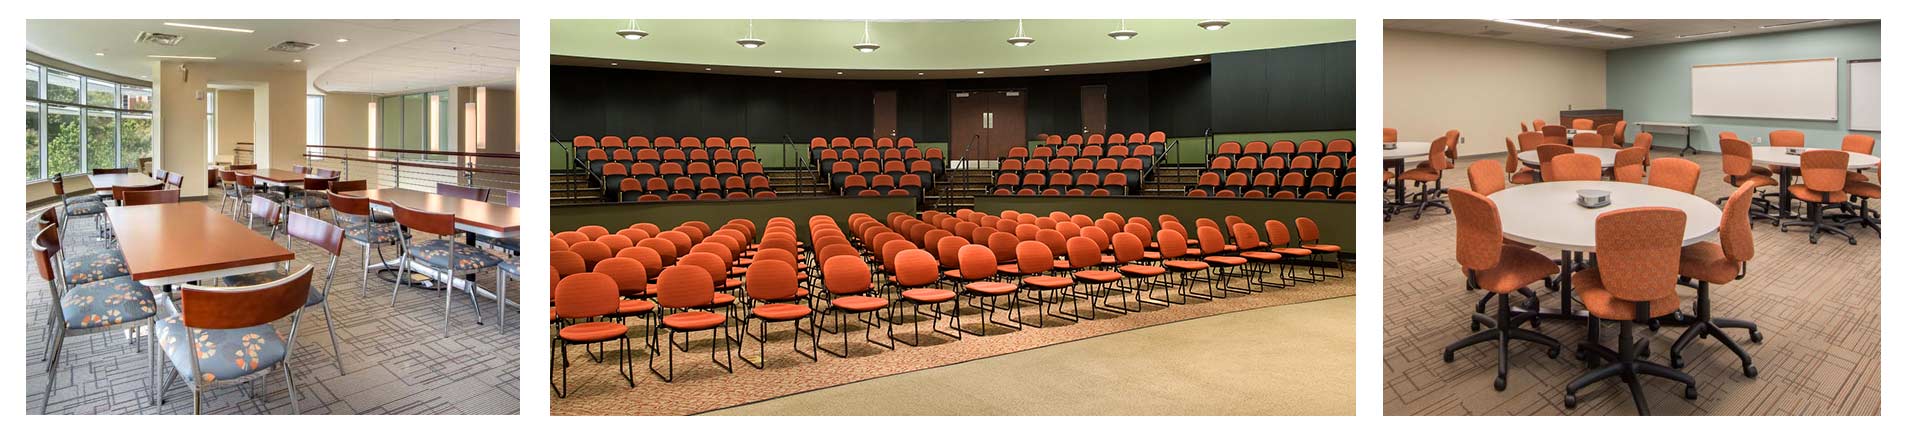 KSU Events and Venue Management Auditoriums Classrooms Header